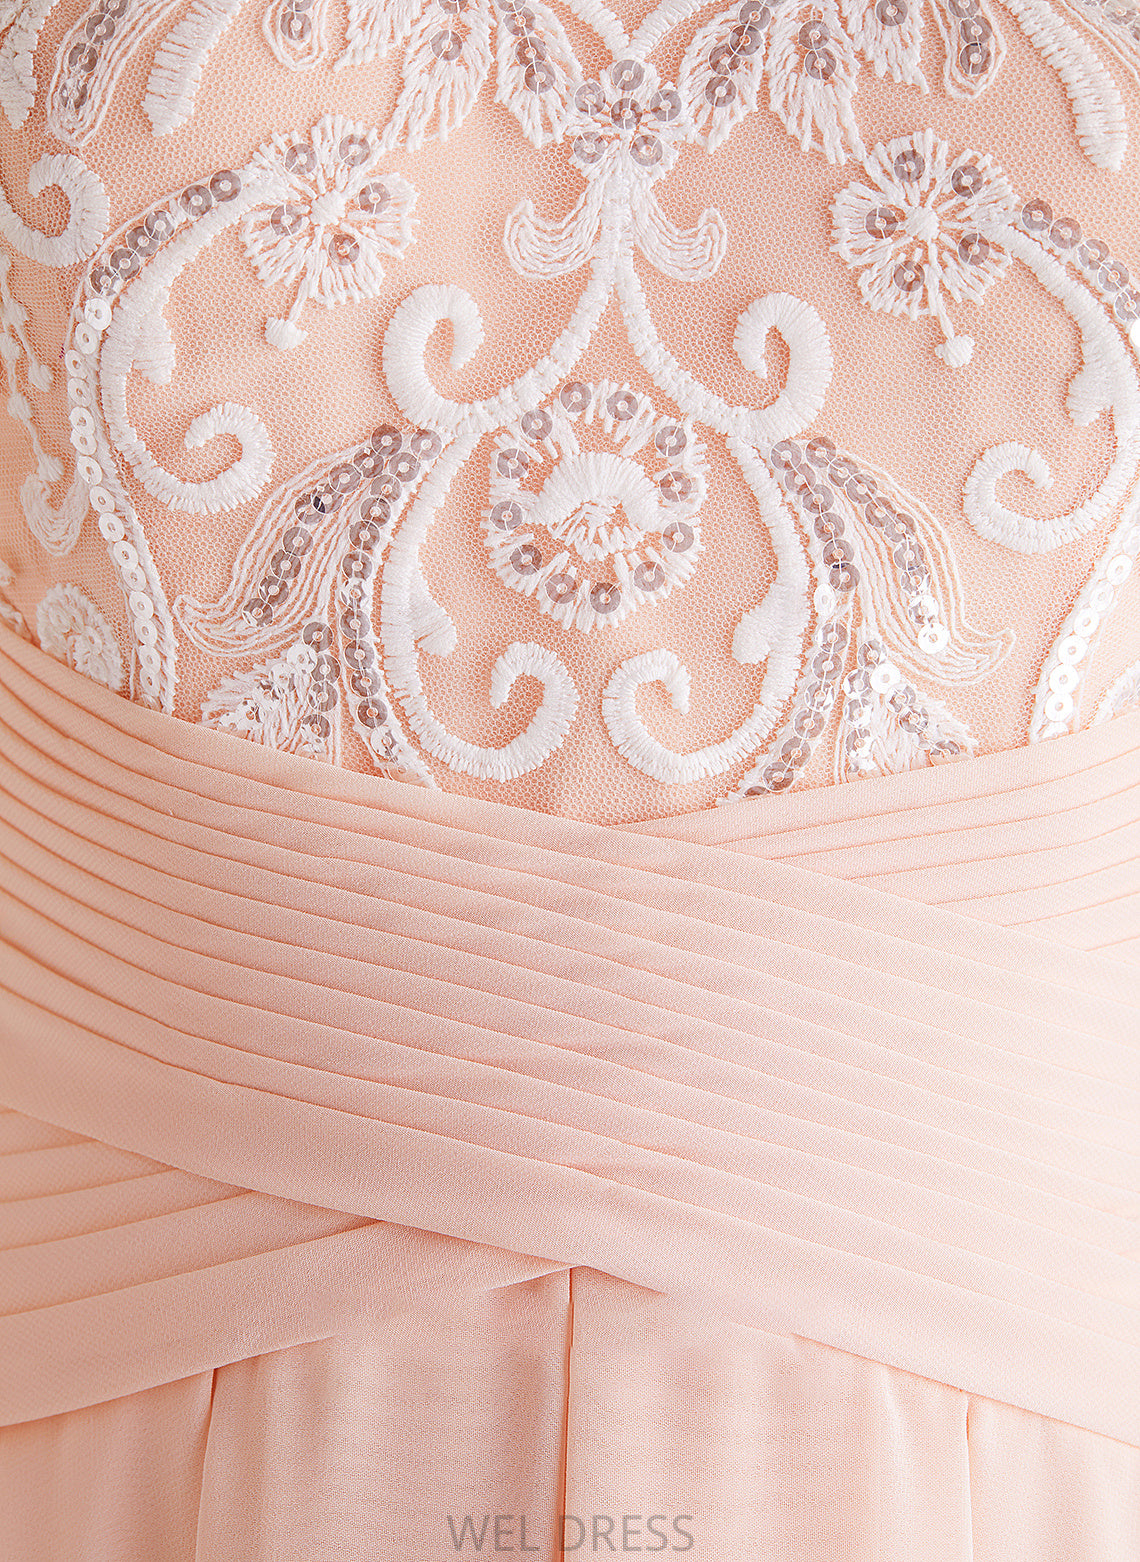 Asymmetrical With Chiffon Dress A-Line Wedding Off-the-Shoulder Perla Wedding Dresses Sequins